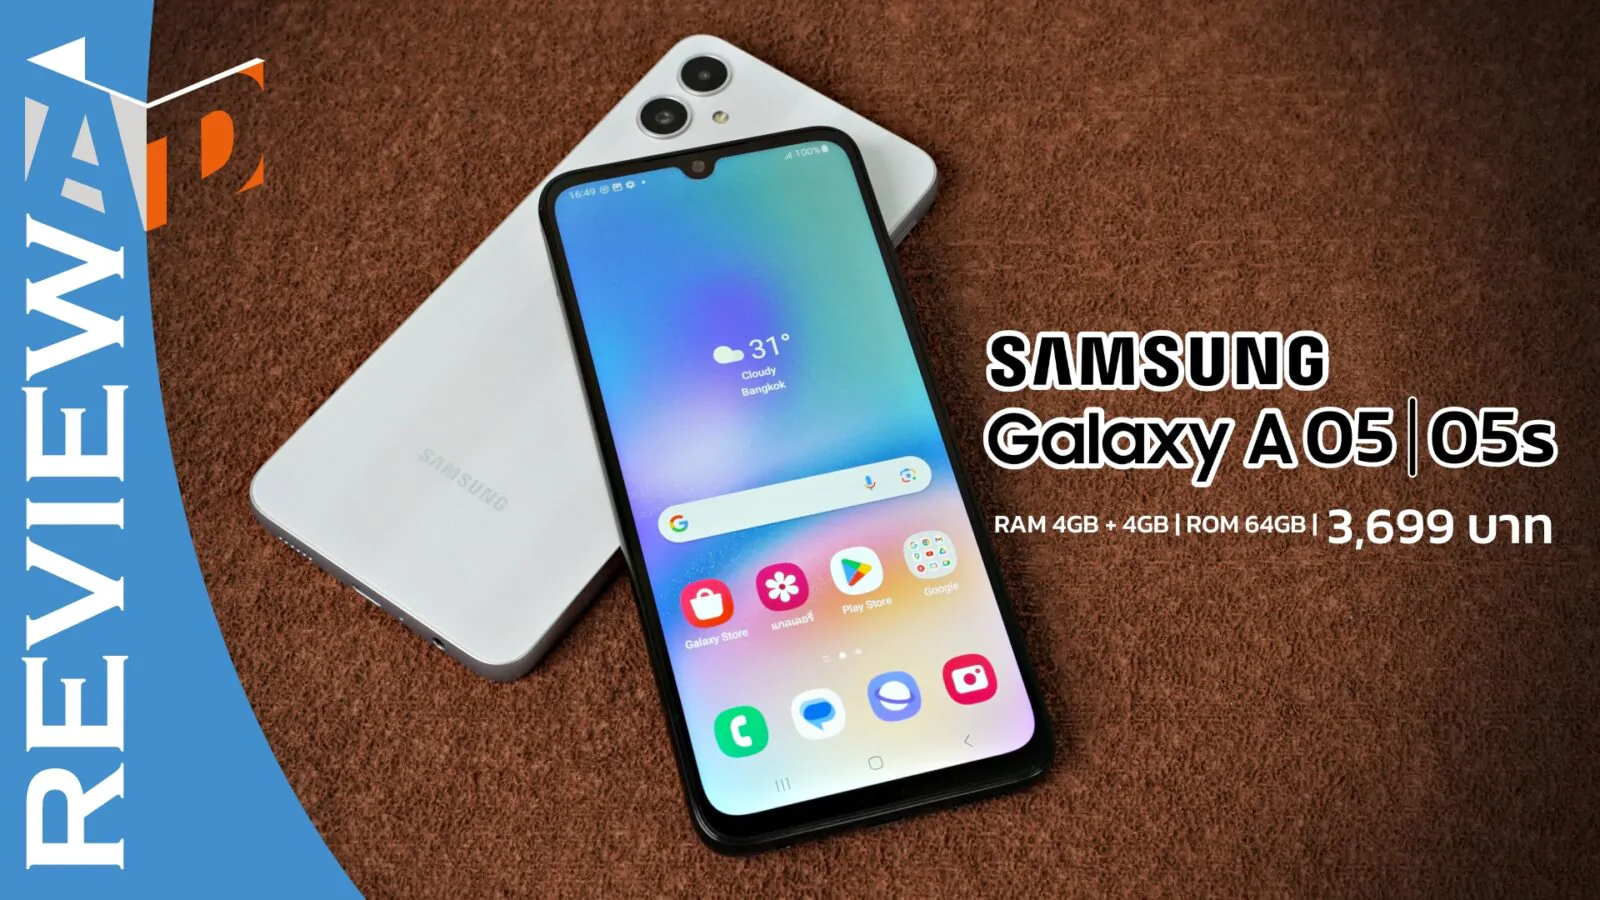 DSC04446 1 | Galaxy A05 | รีวิว Samsung Galaxy A05 / A05s ซัมซุงจอใหญ่ ใช้ง่าย ราคาแค่ 3,699 บาท